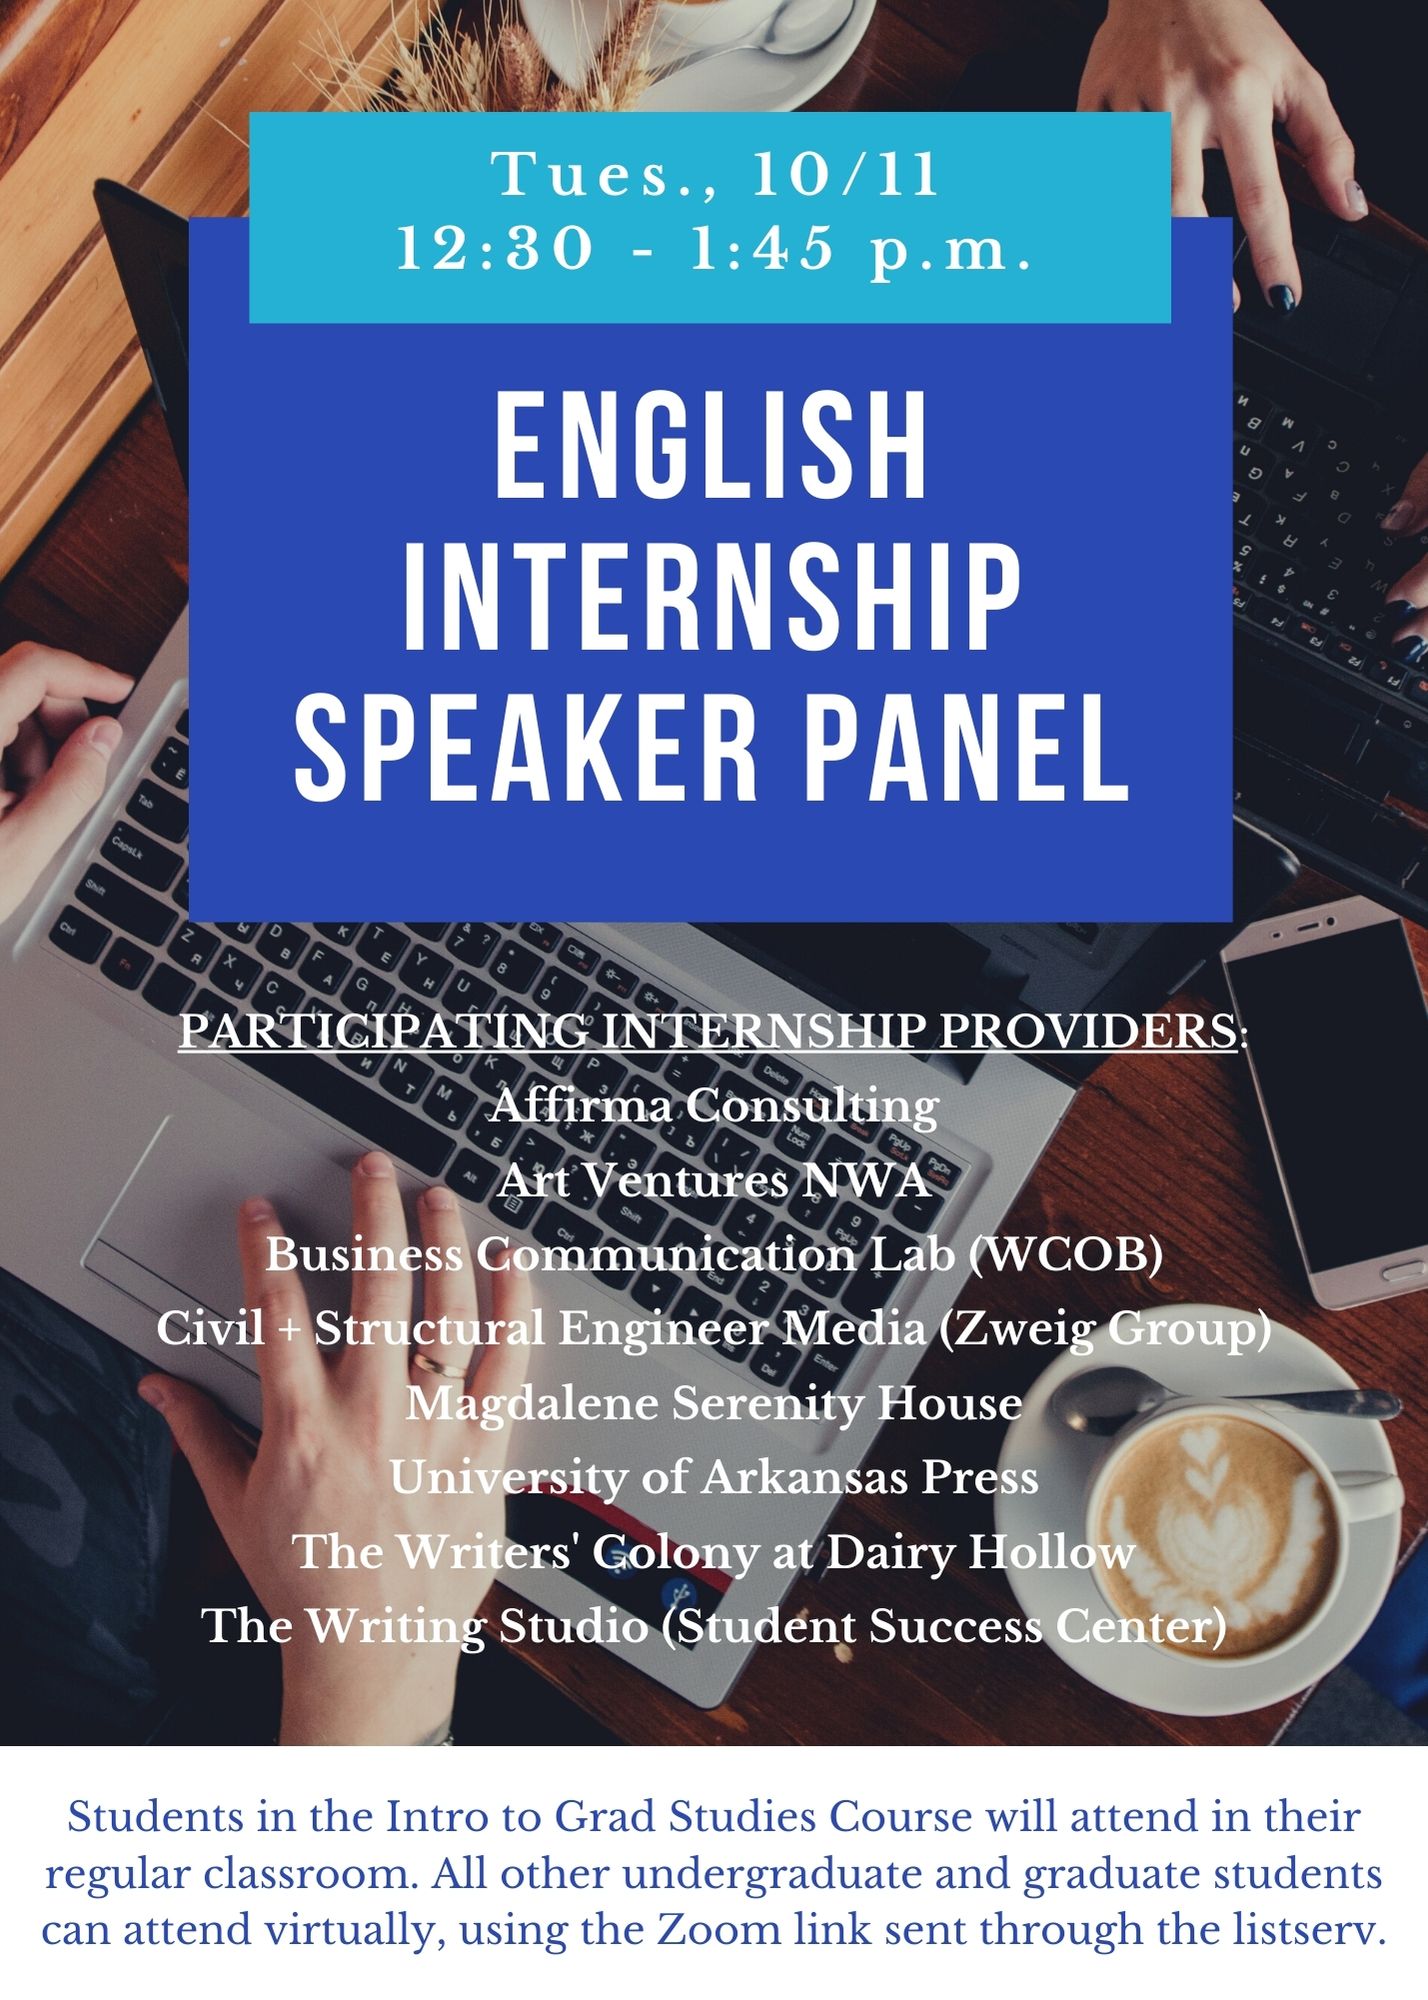 internship speaker panel flyer